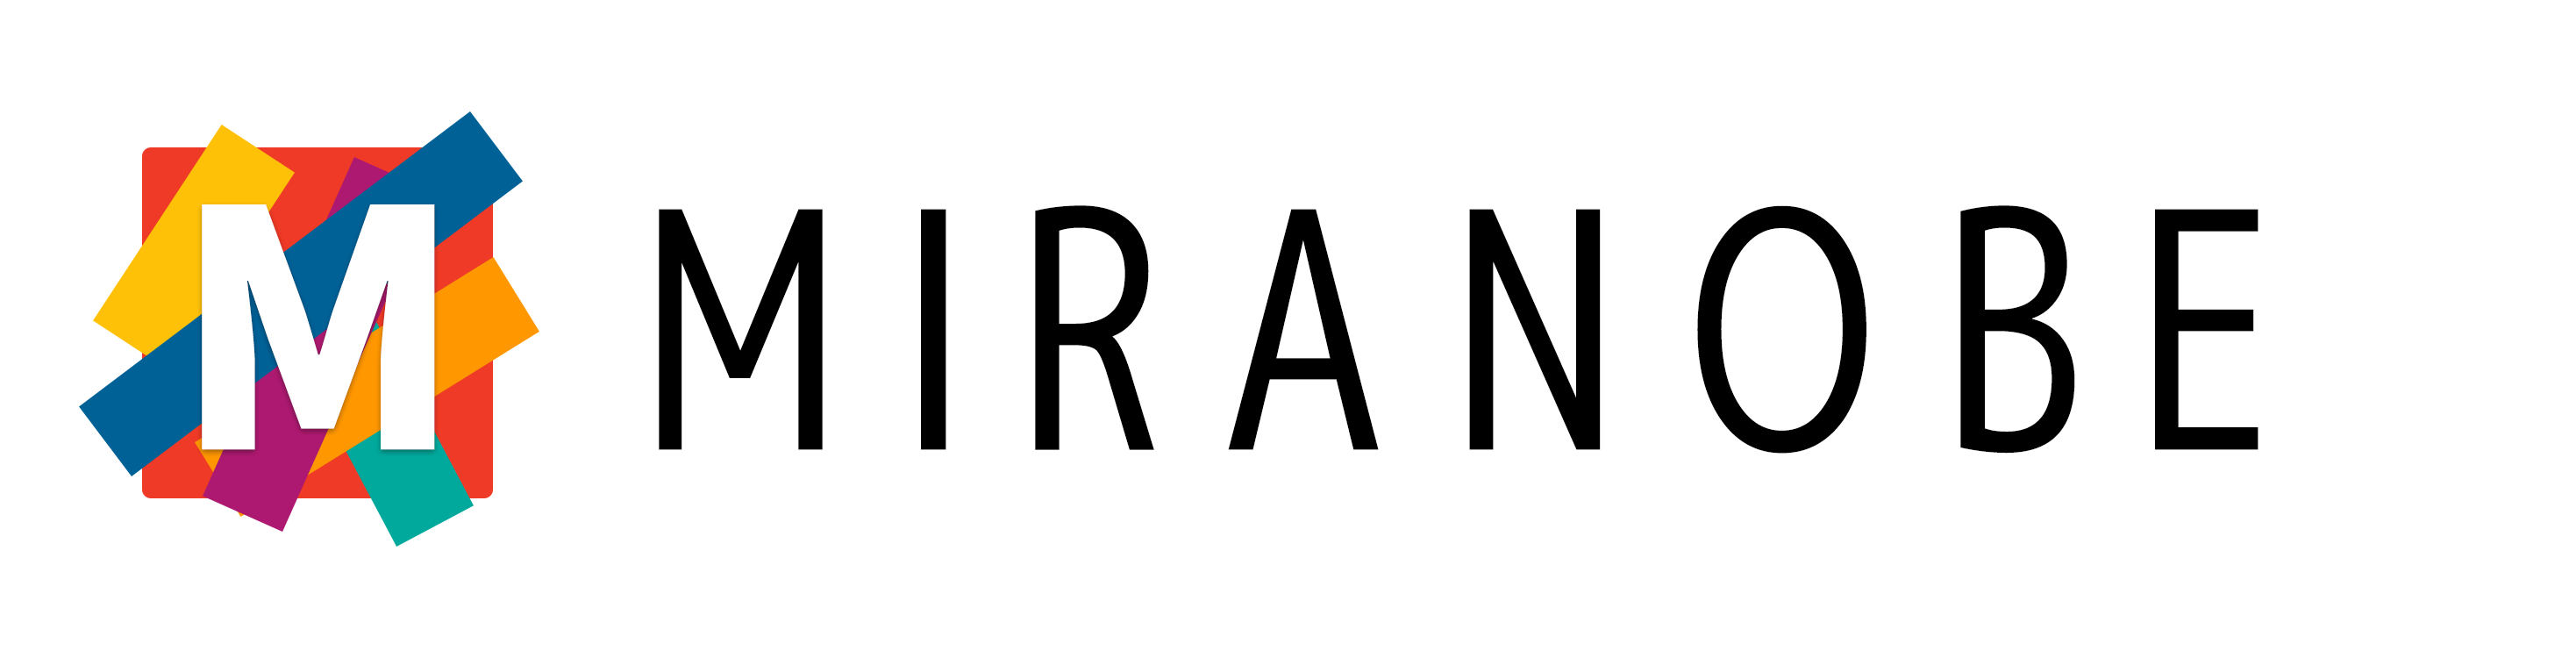 株式会社MIRANOBE Logo